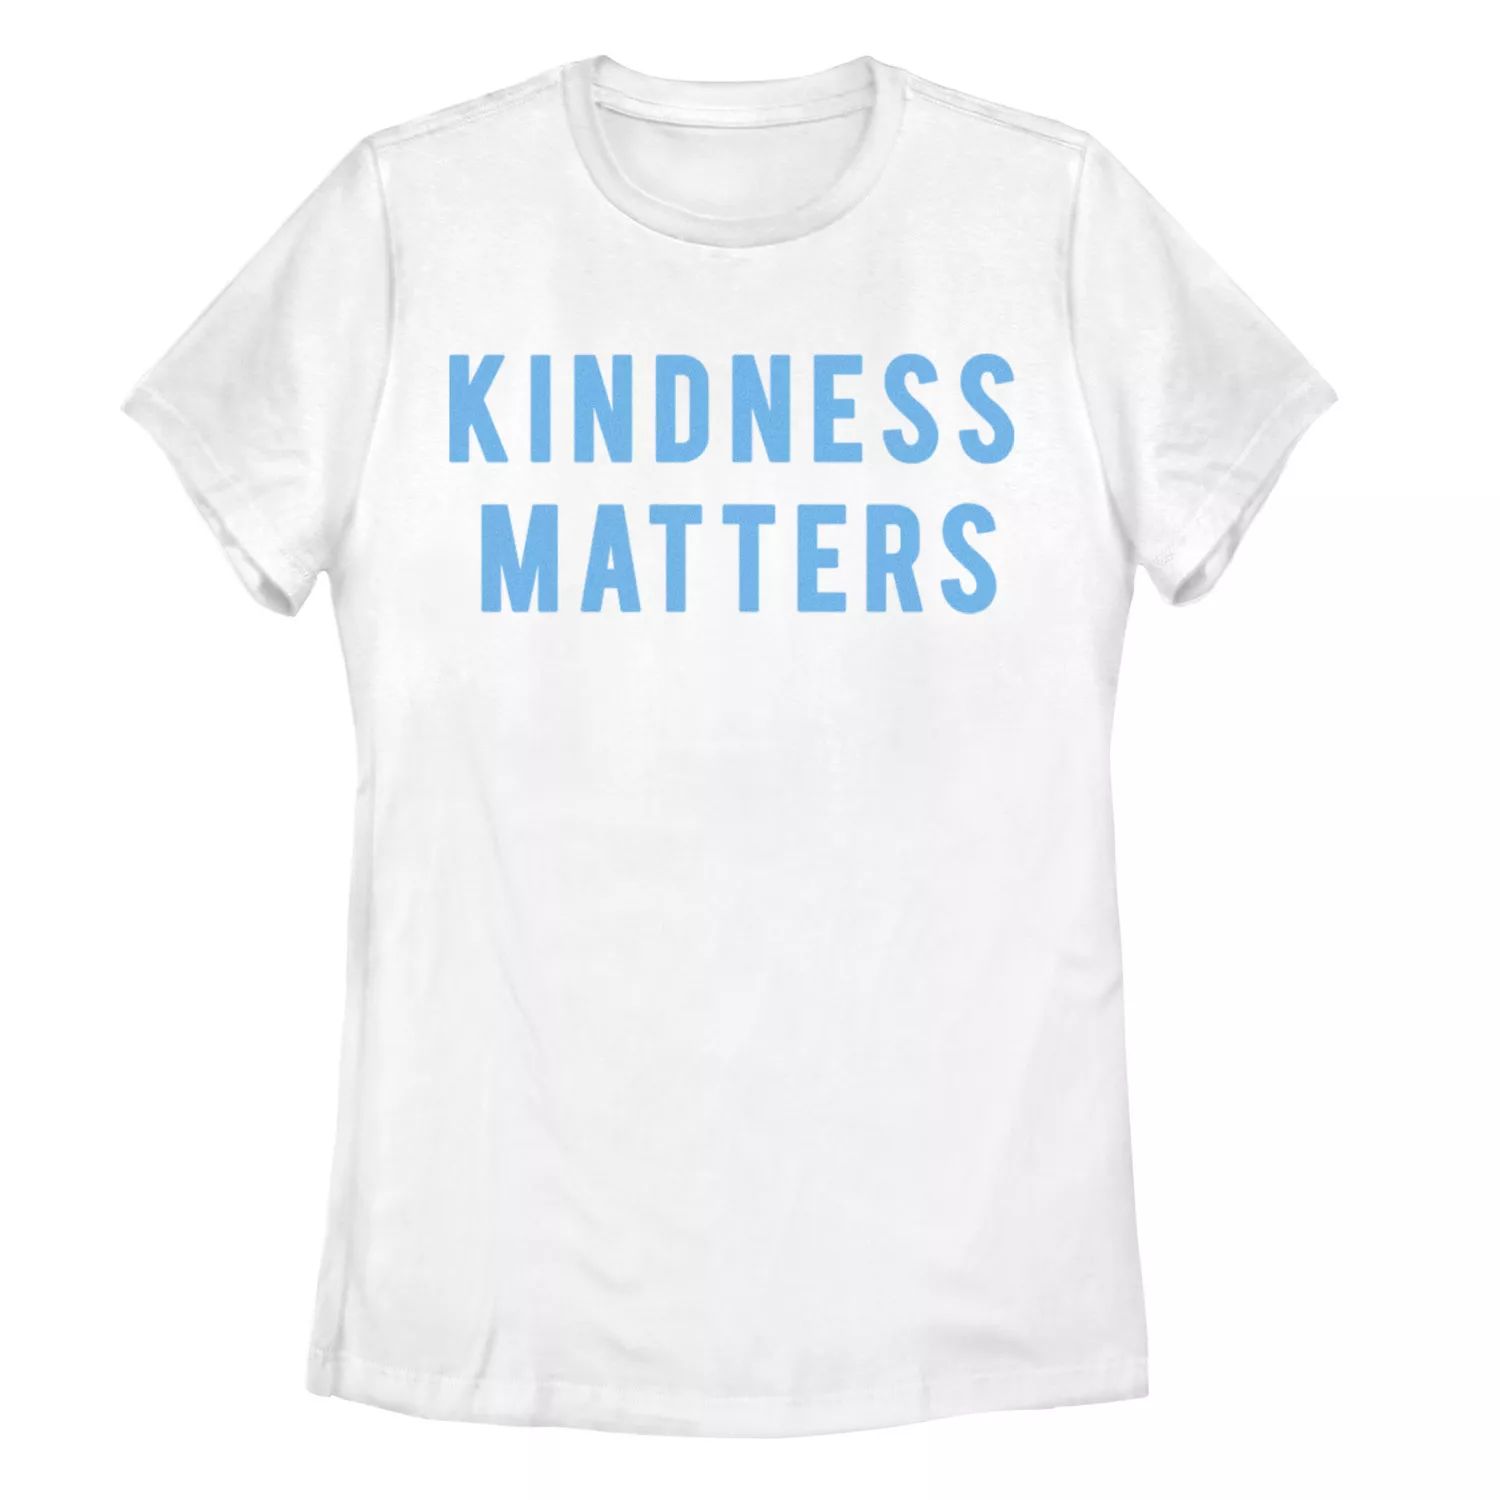 Детская футболка синего цвета с надписью «Kindness Matters» scatter kindness tee dandelion long be happy kindness matters dandelion shirt cute kindness 100% cotton unisex drop shipping